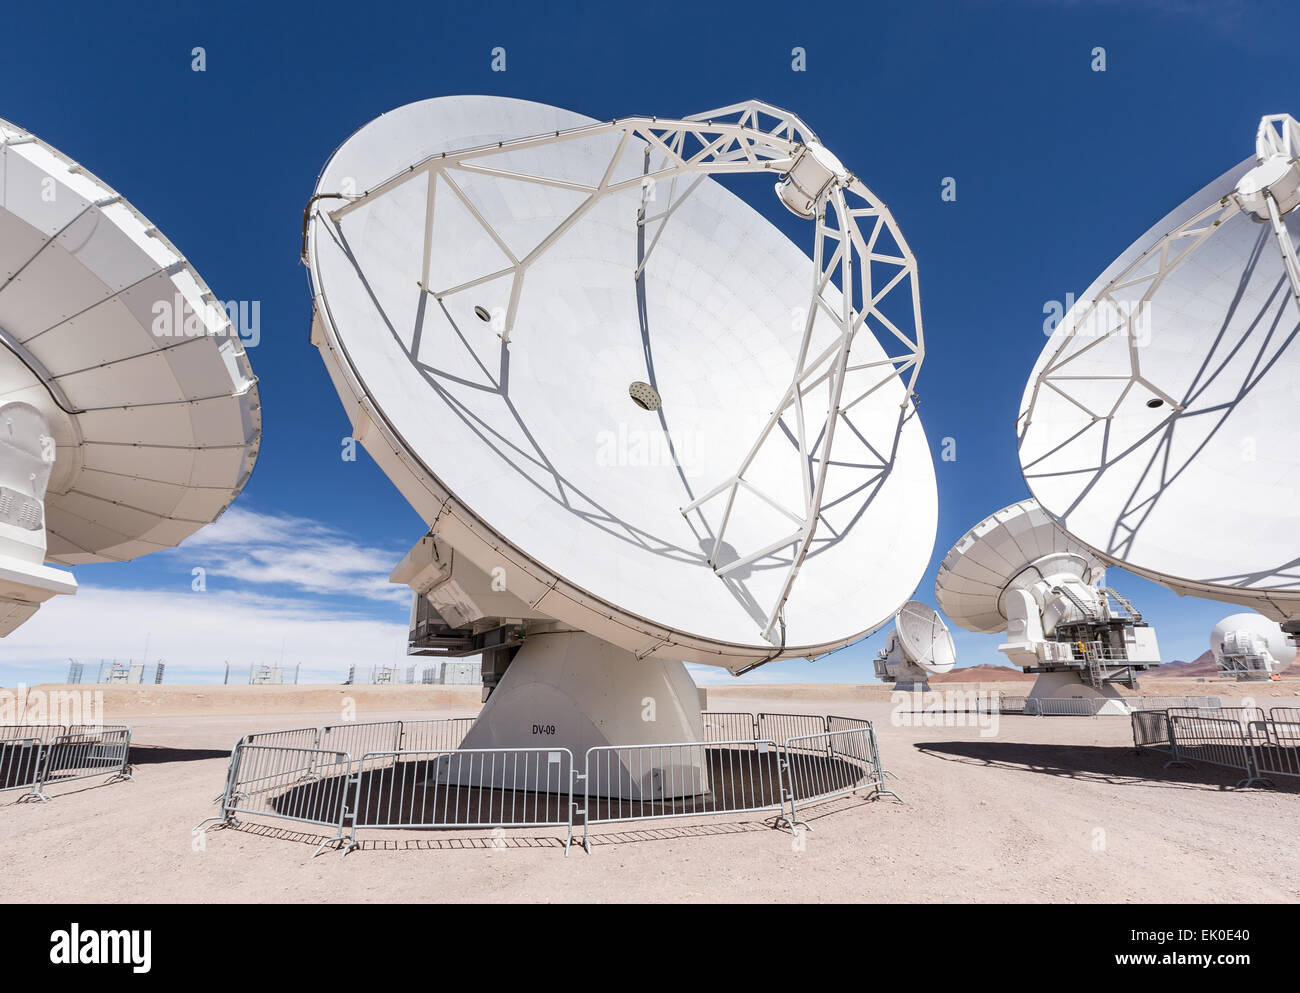 At ALMA radio telescope observatory, San Pedro de Atacama, Chile, South America Stock Photo